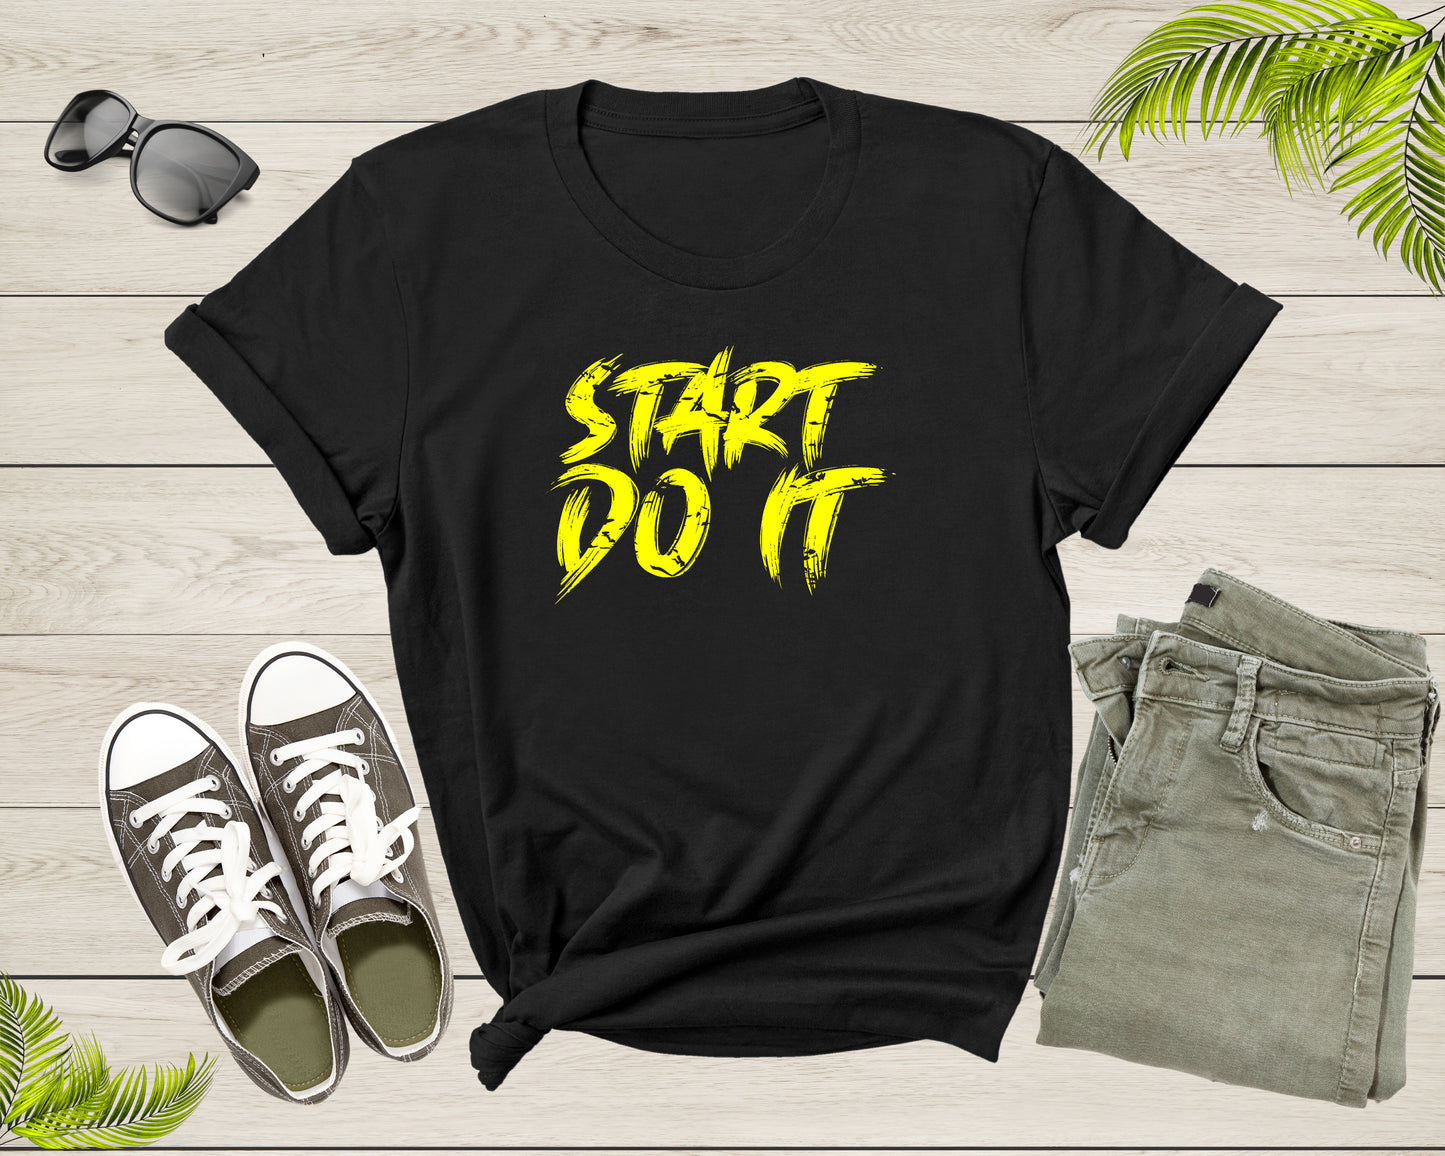 Start Do It Motivational Incentive Encouraging Slogan Text T-Shirt Cool Motivation Quote Lover Gift for Men Women Kids Boys Girls Tshirt